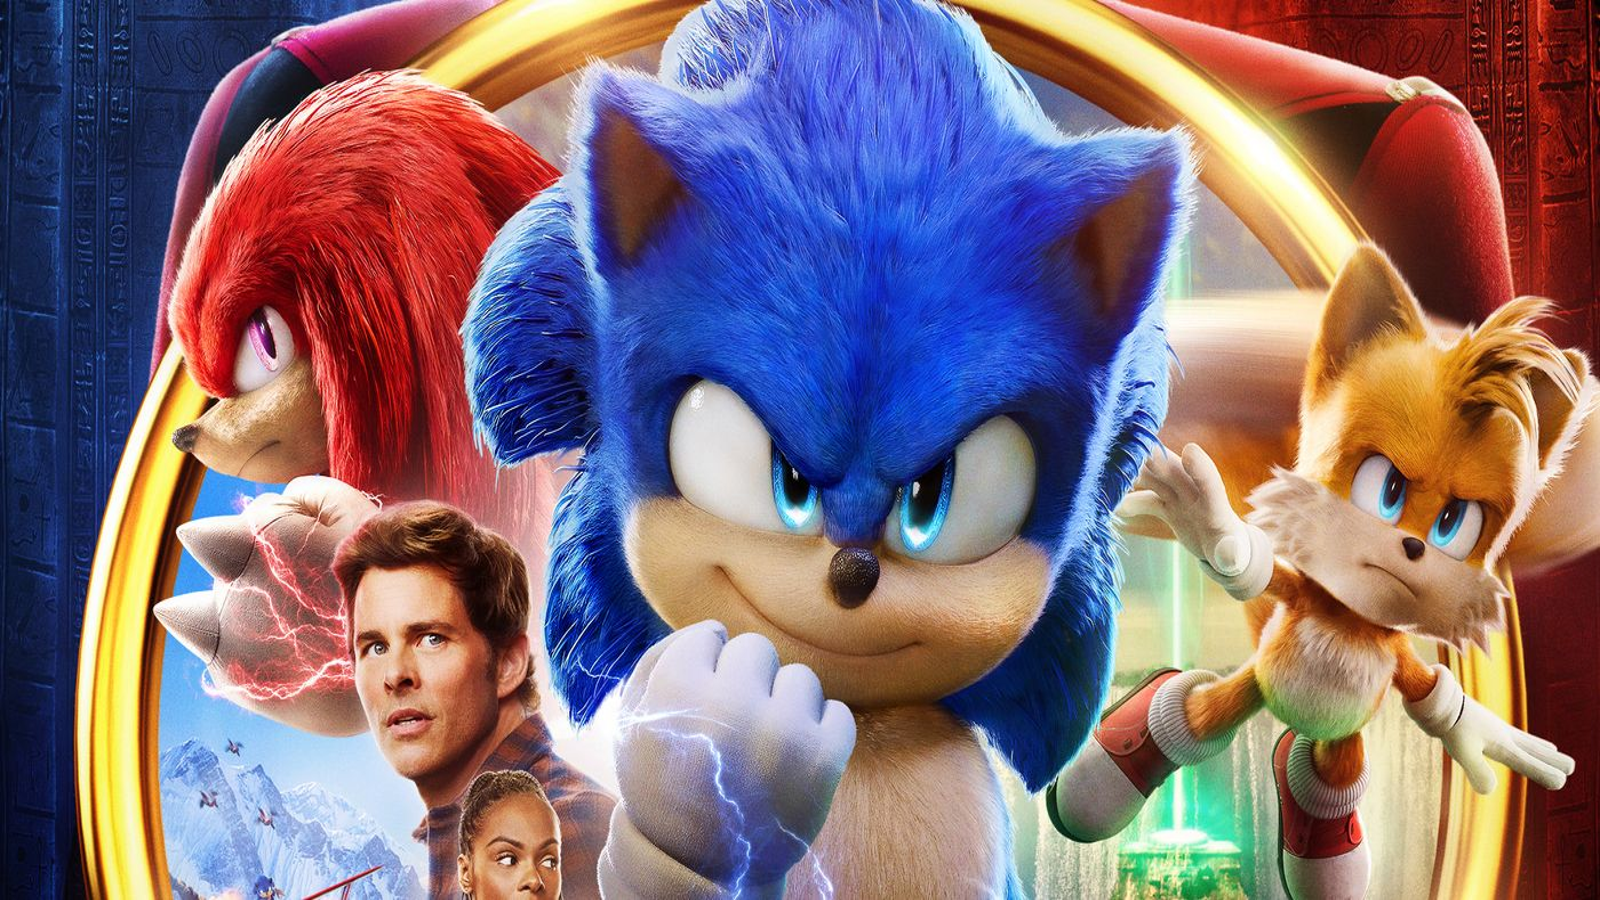 SONIC 2, Box Office Update Sonic 2 - Jim Carrey Online